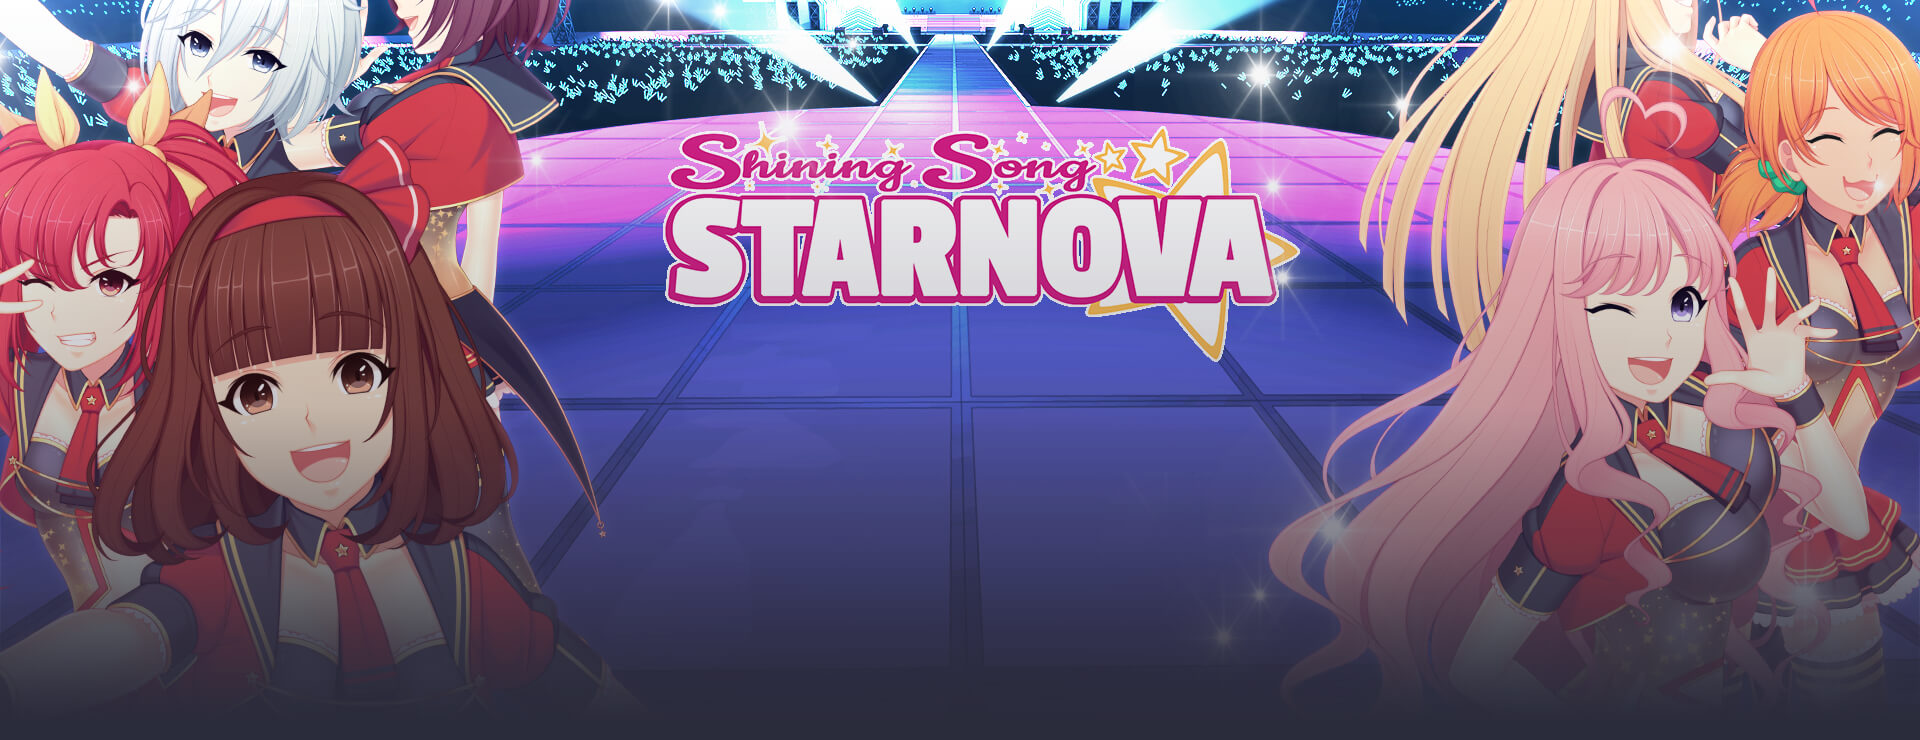 Shining Song Starnova - 虚拟小说 遊戲